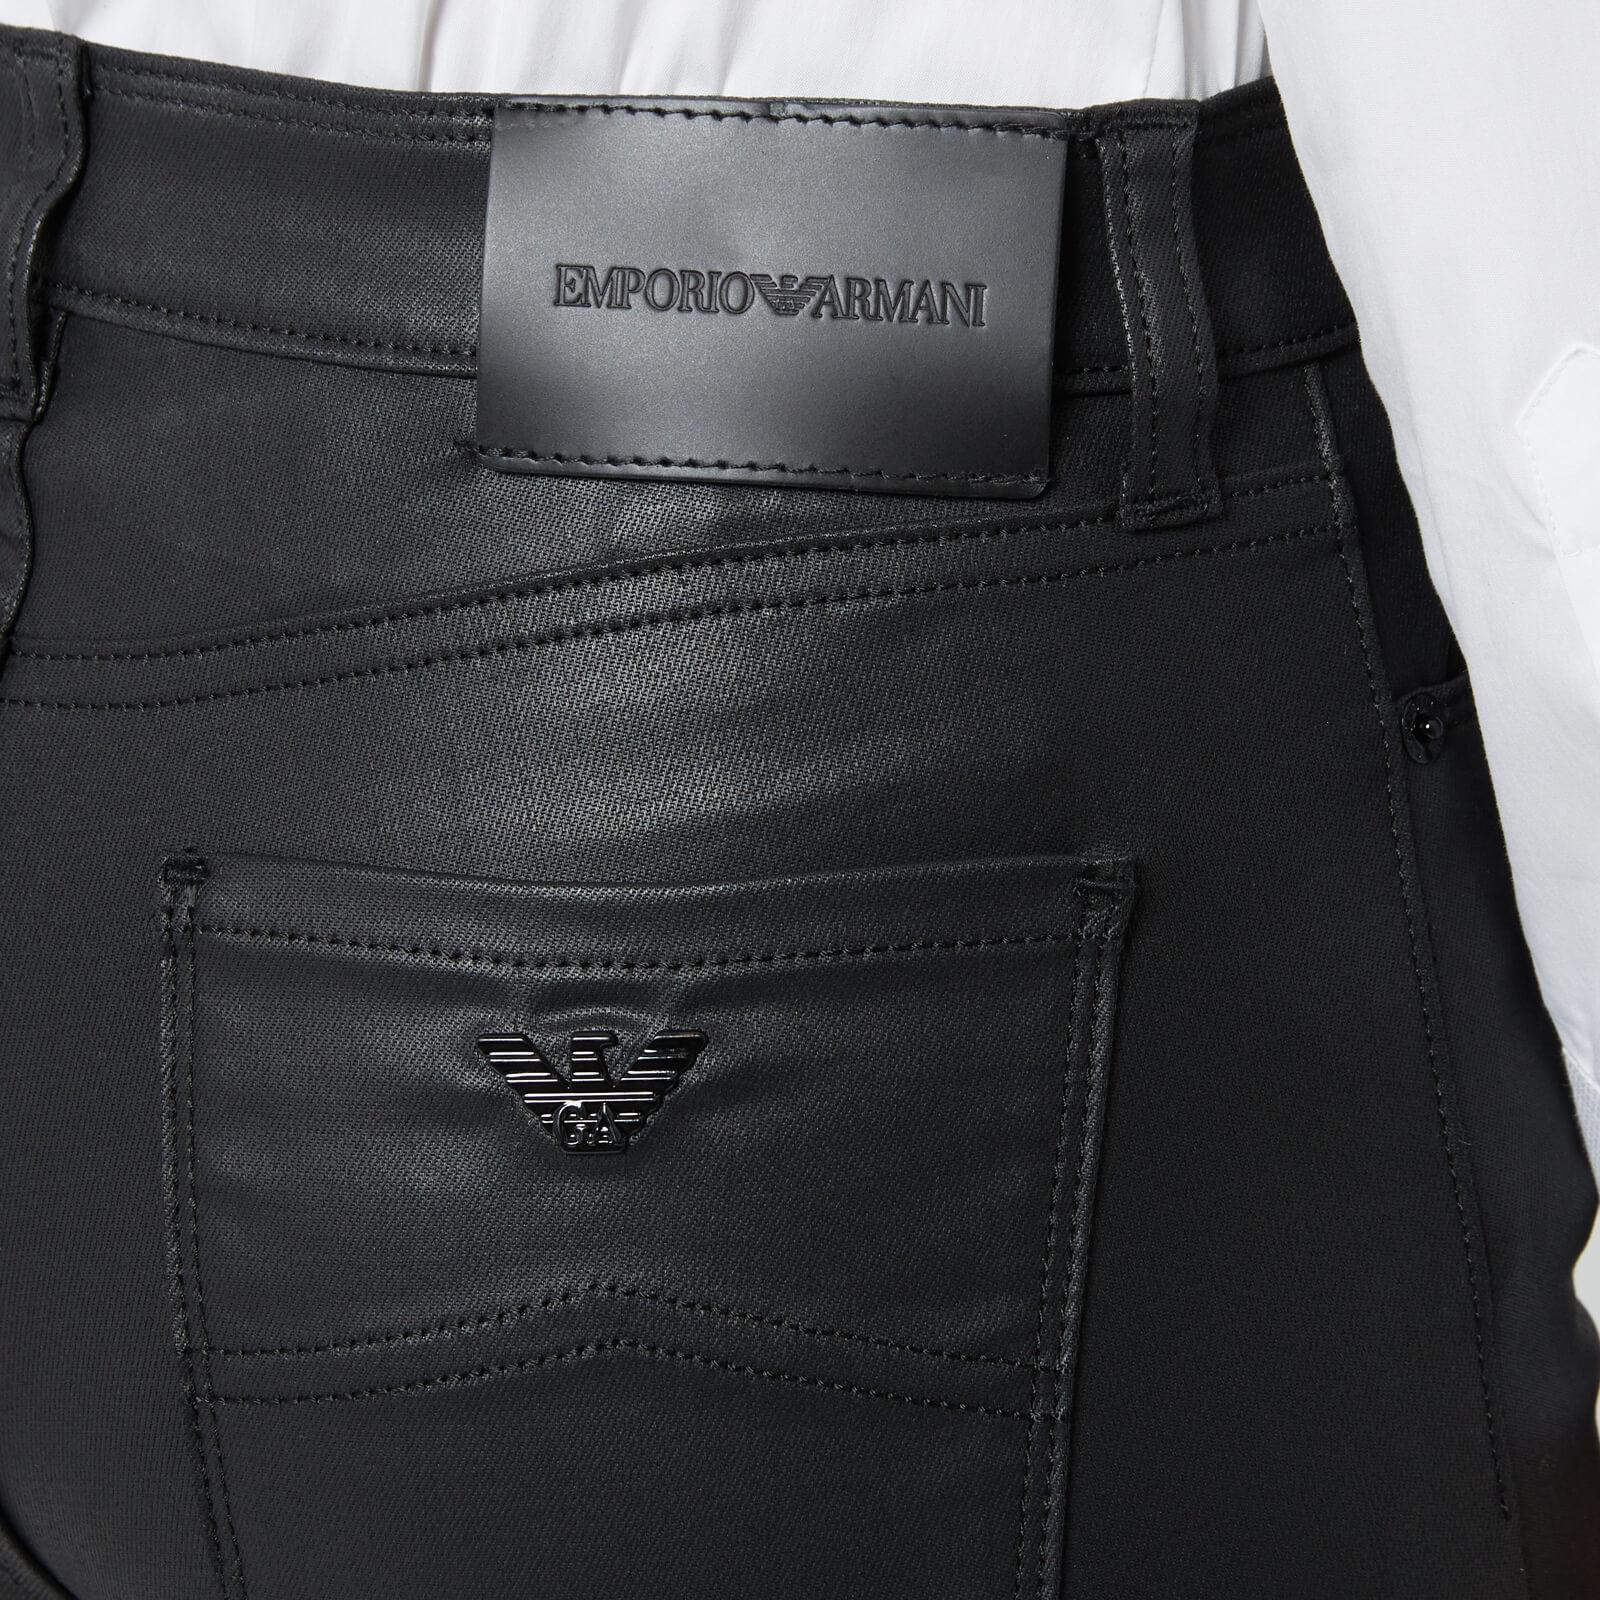 Emporio Armani Coated Denim J20 High Rise Skinny Jeans in Black - Lyst